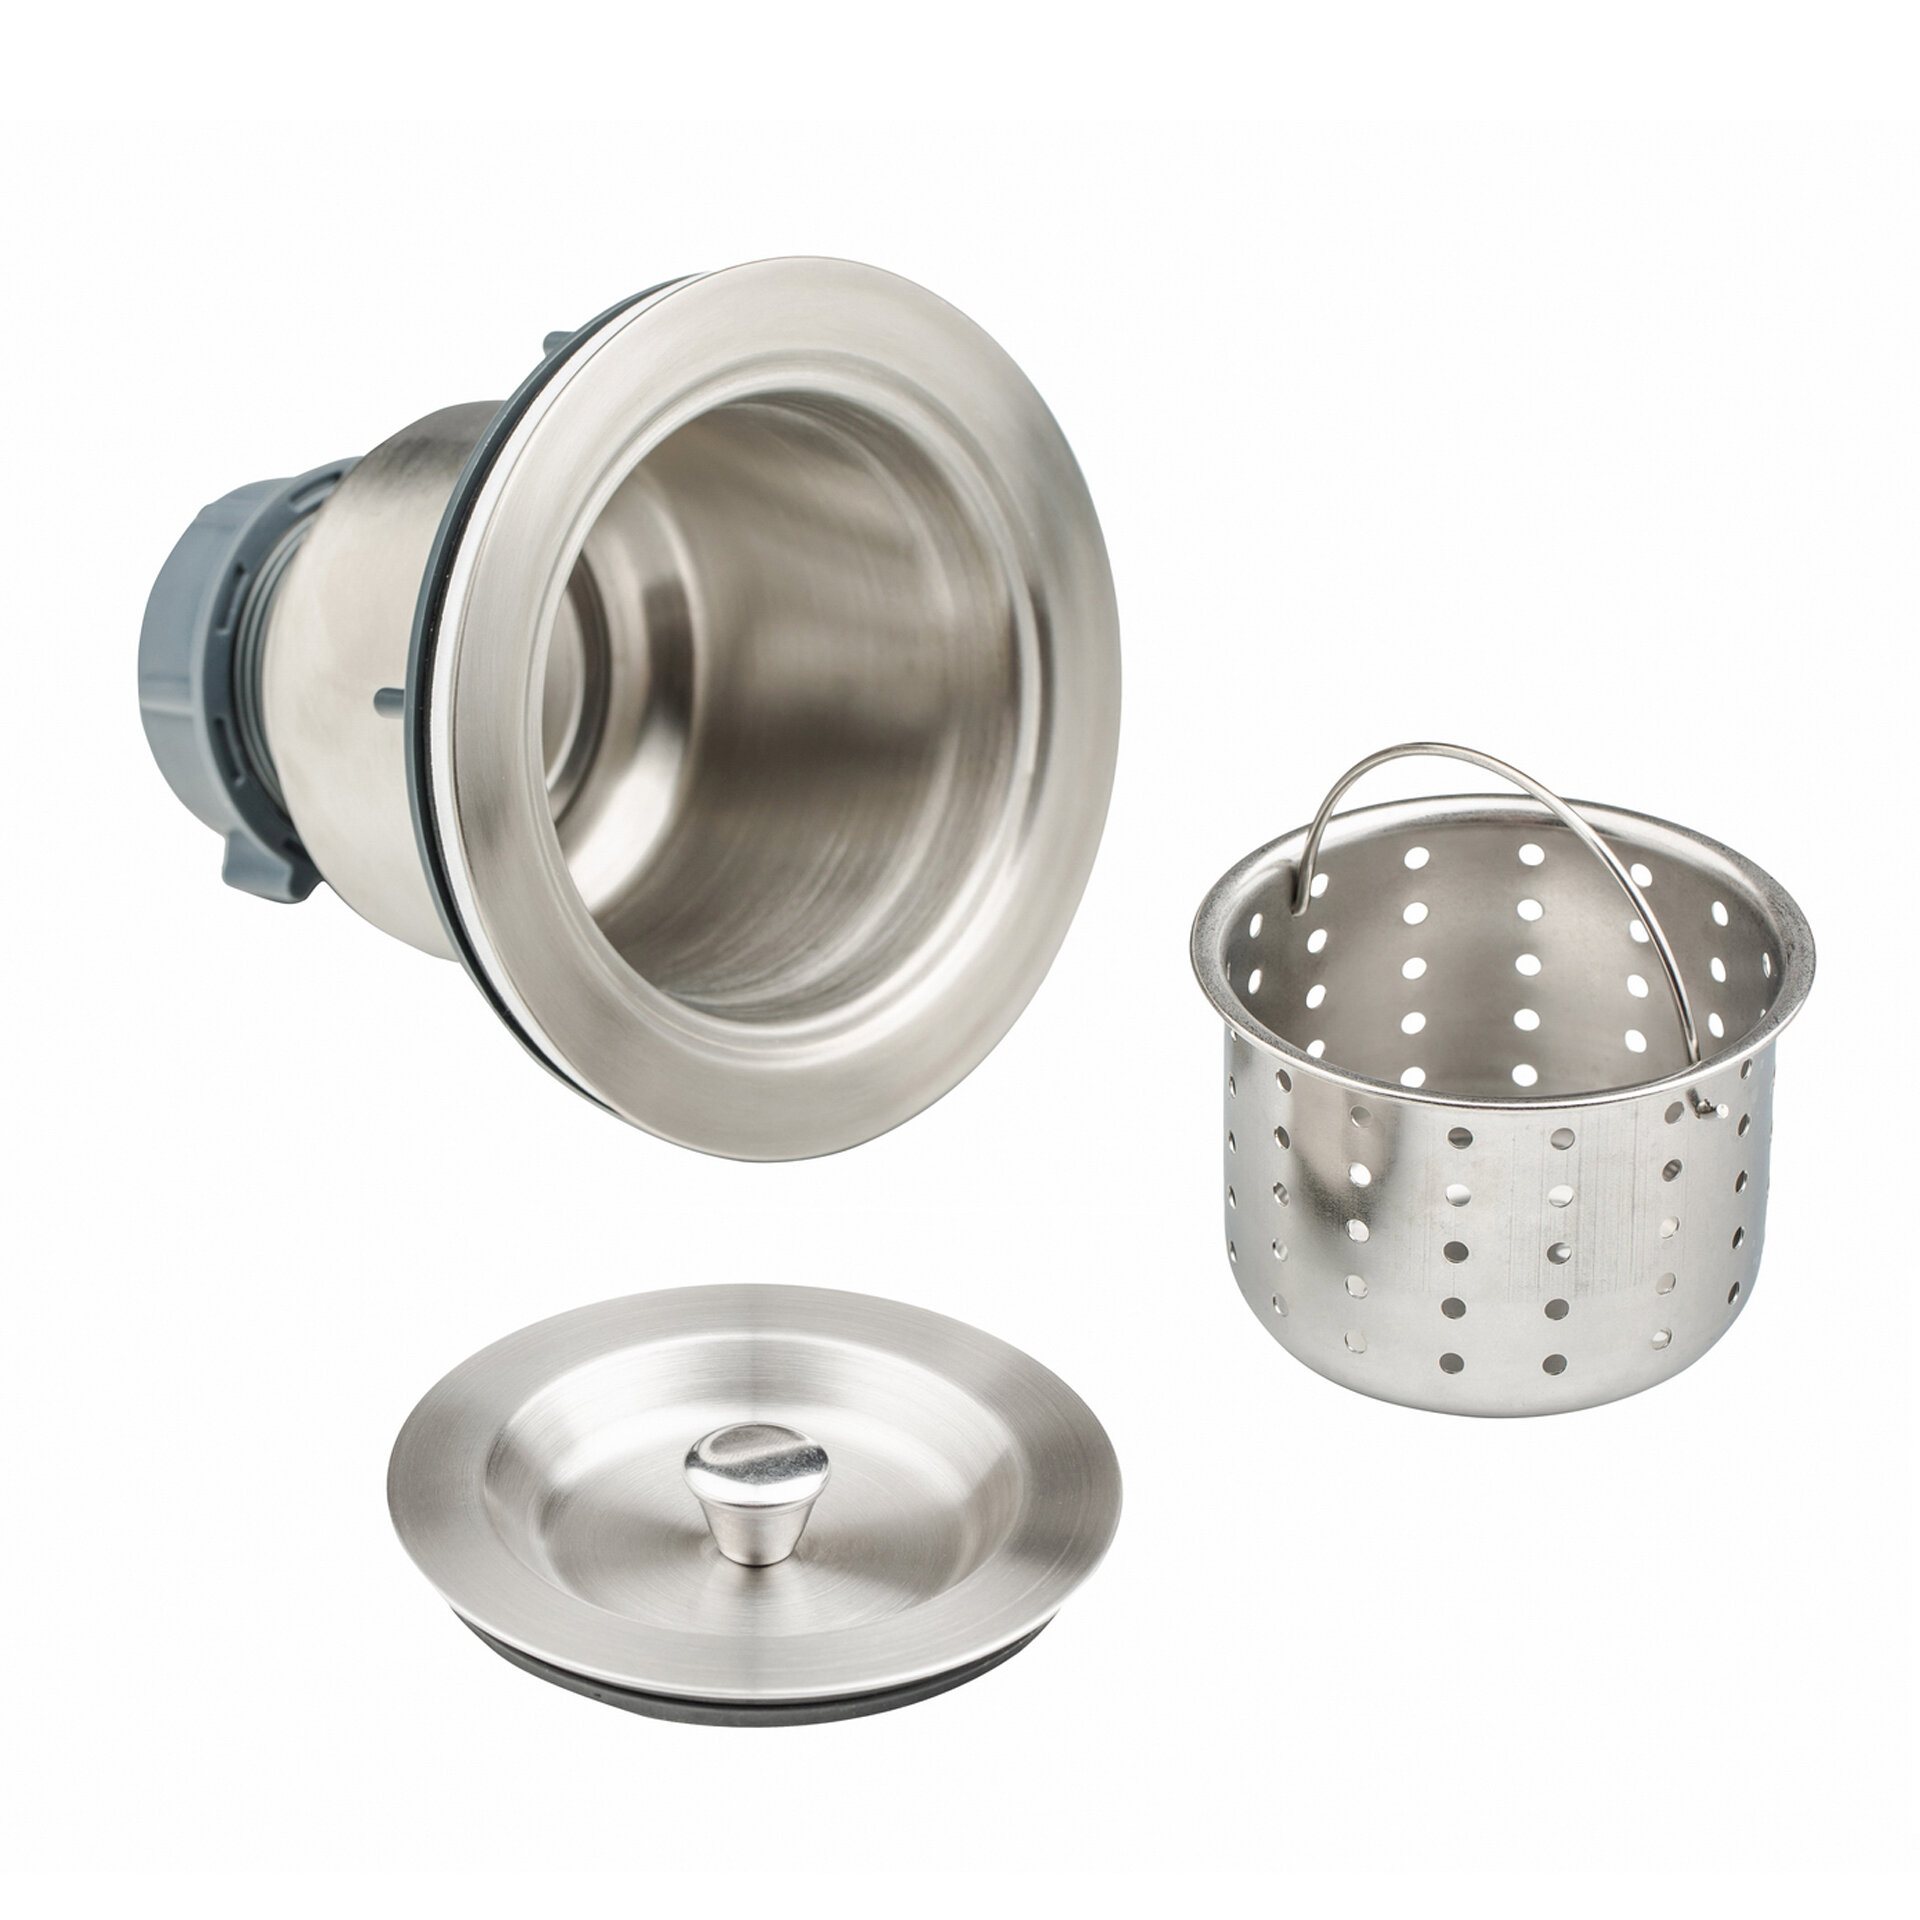 For InSinkErator Home Kitchen Sink Drain Stopper Basket Strainer Waste Plug US